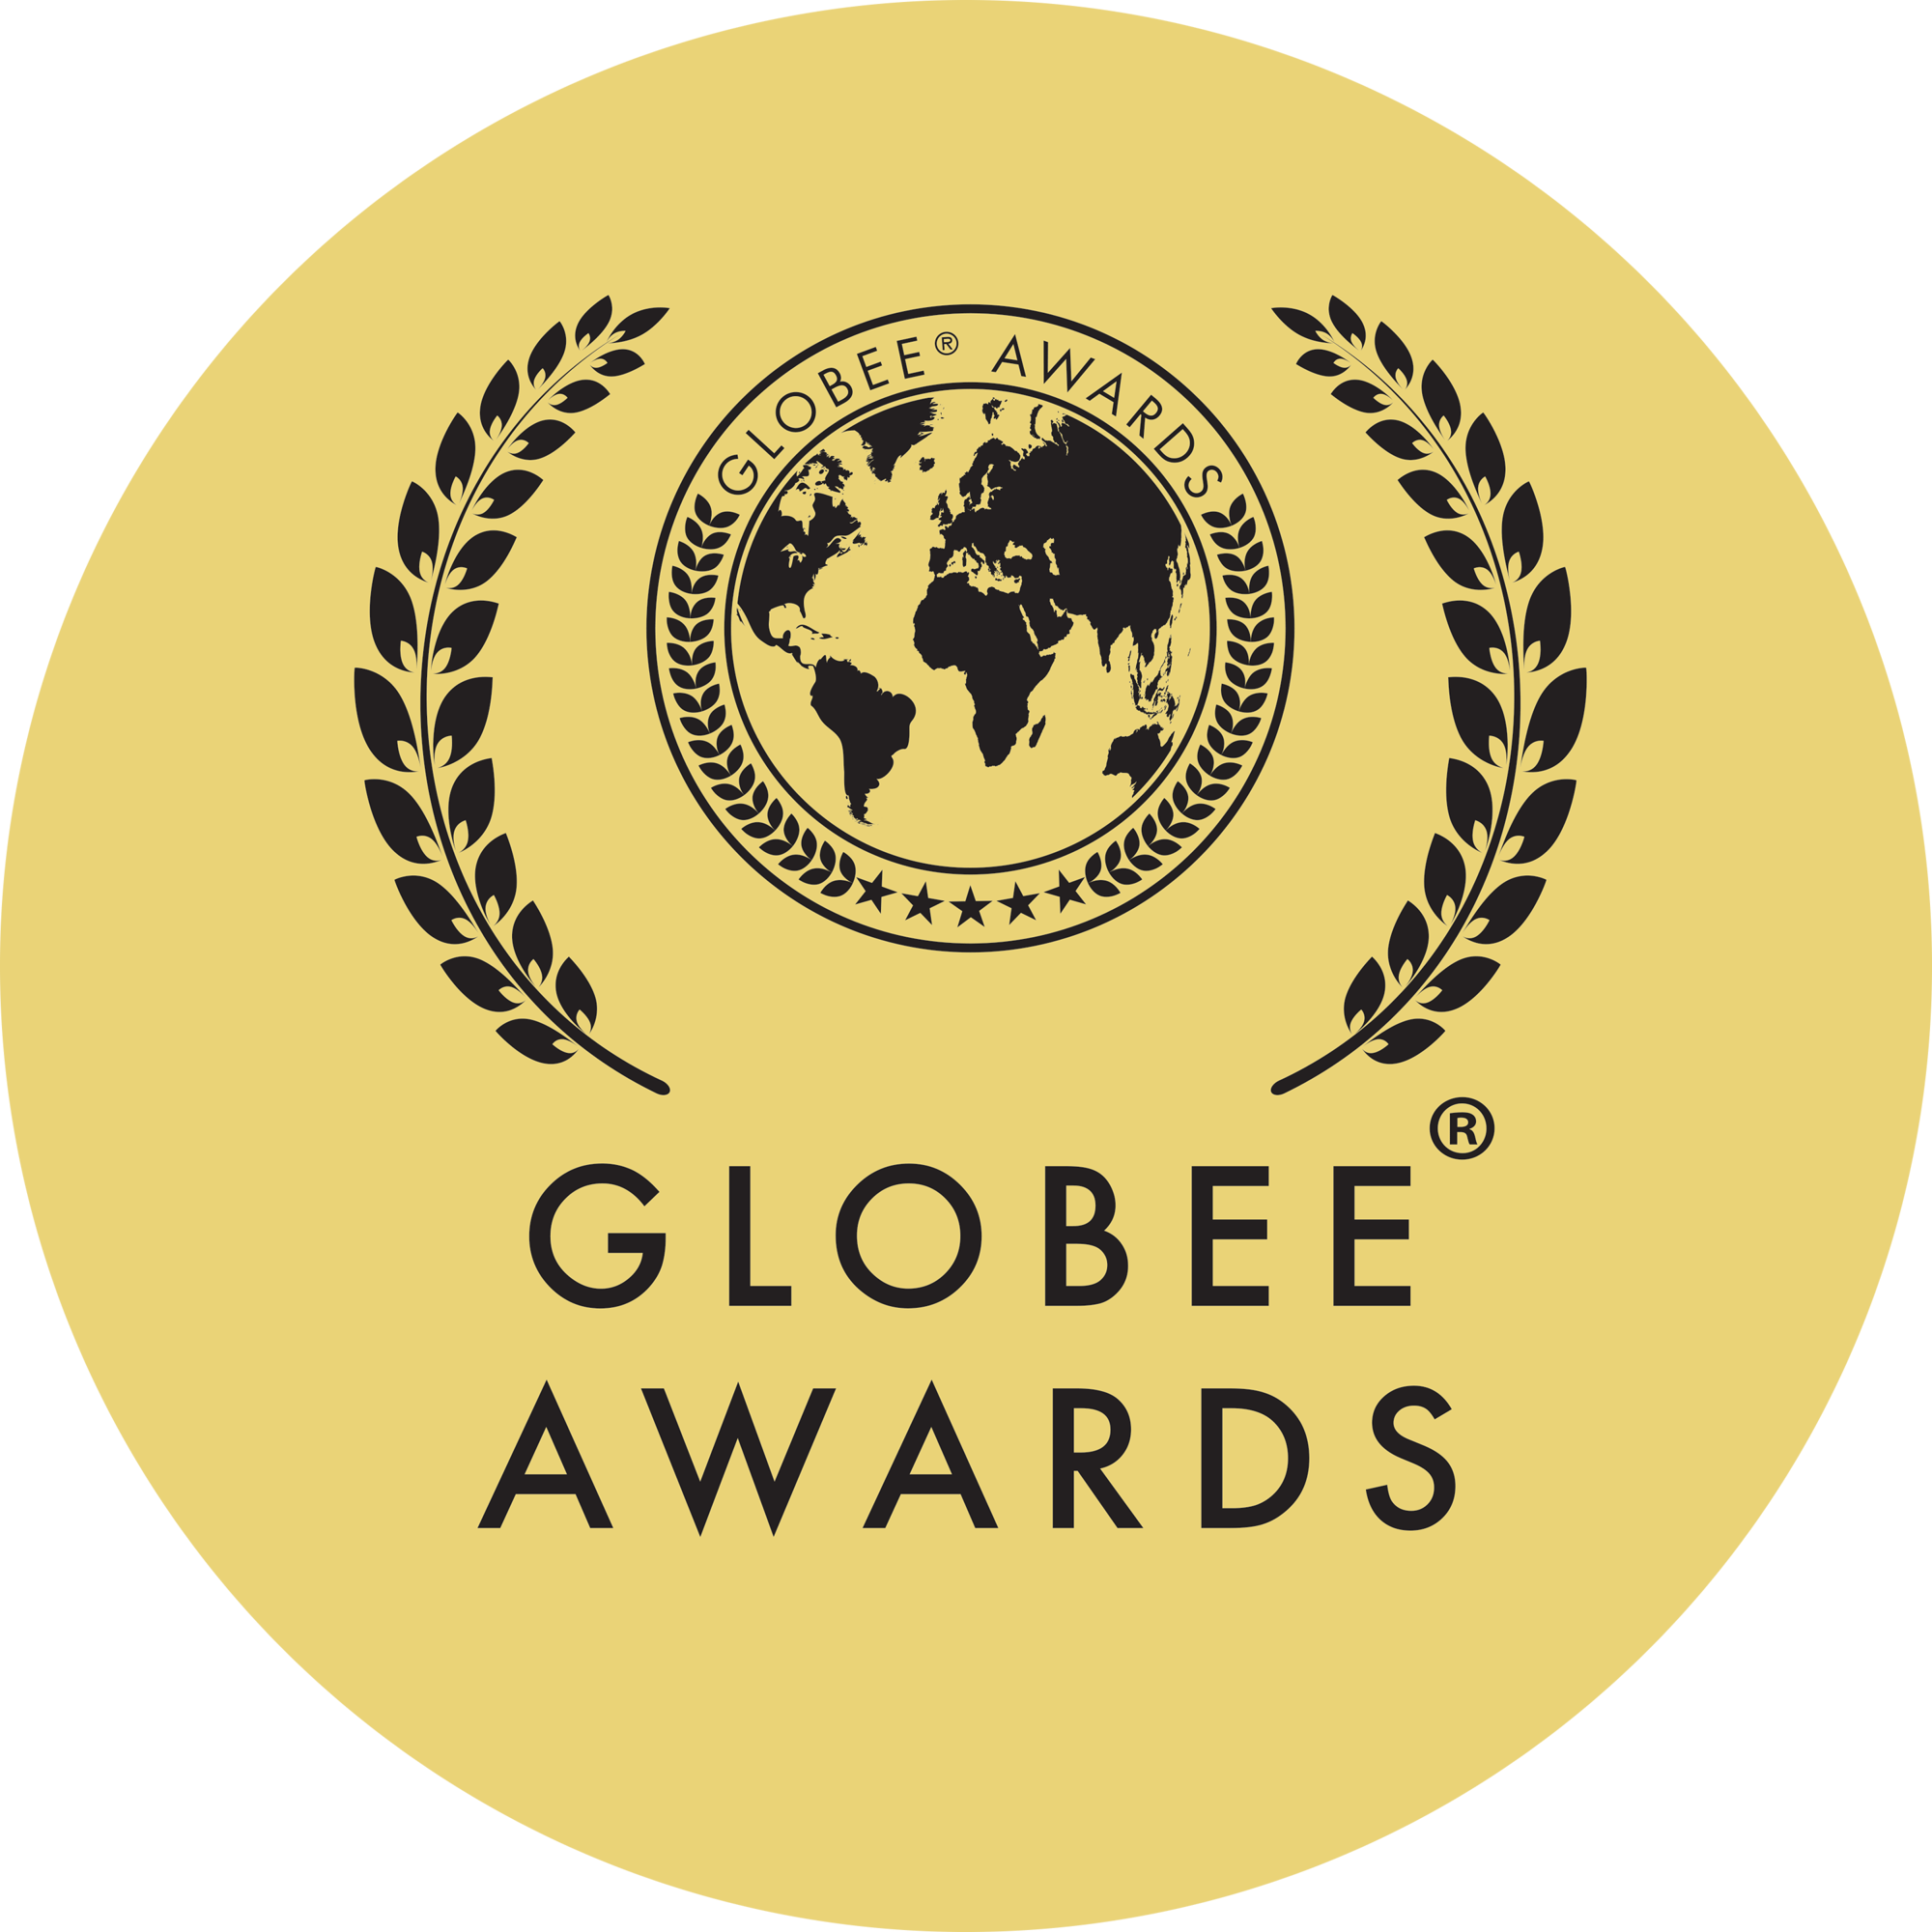 Globee-Awards-logo